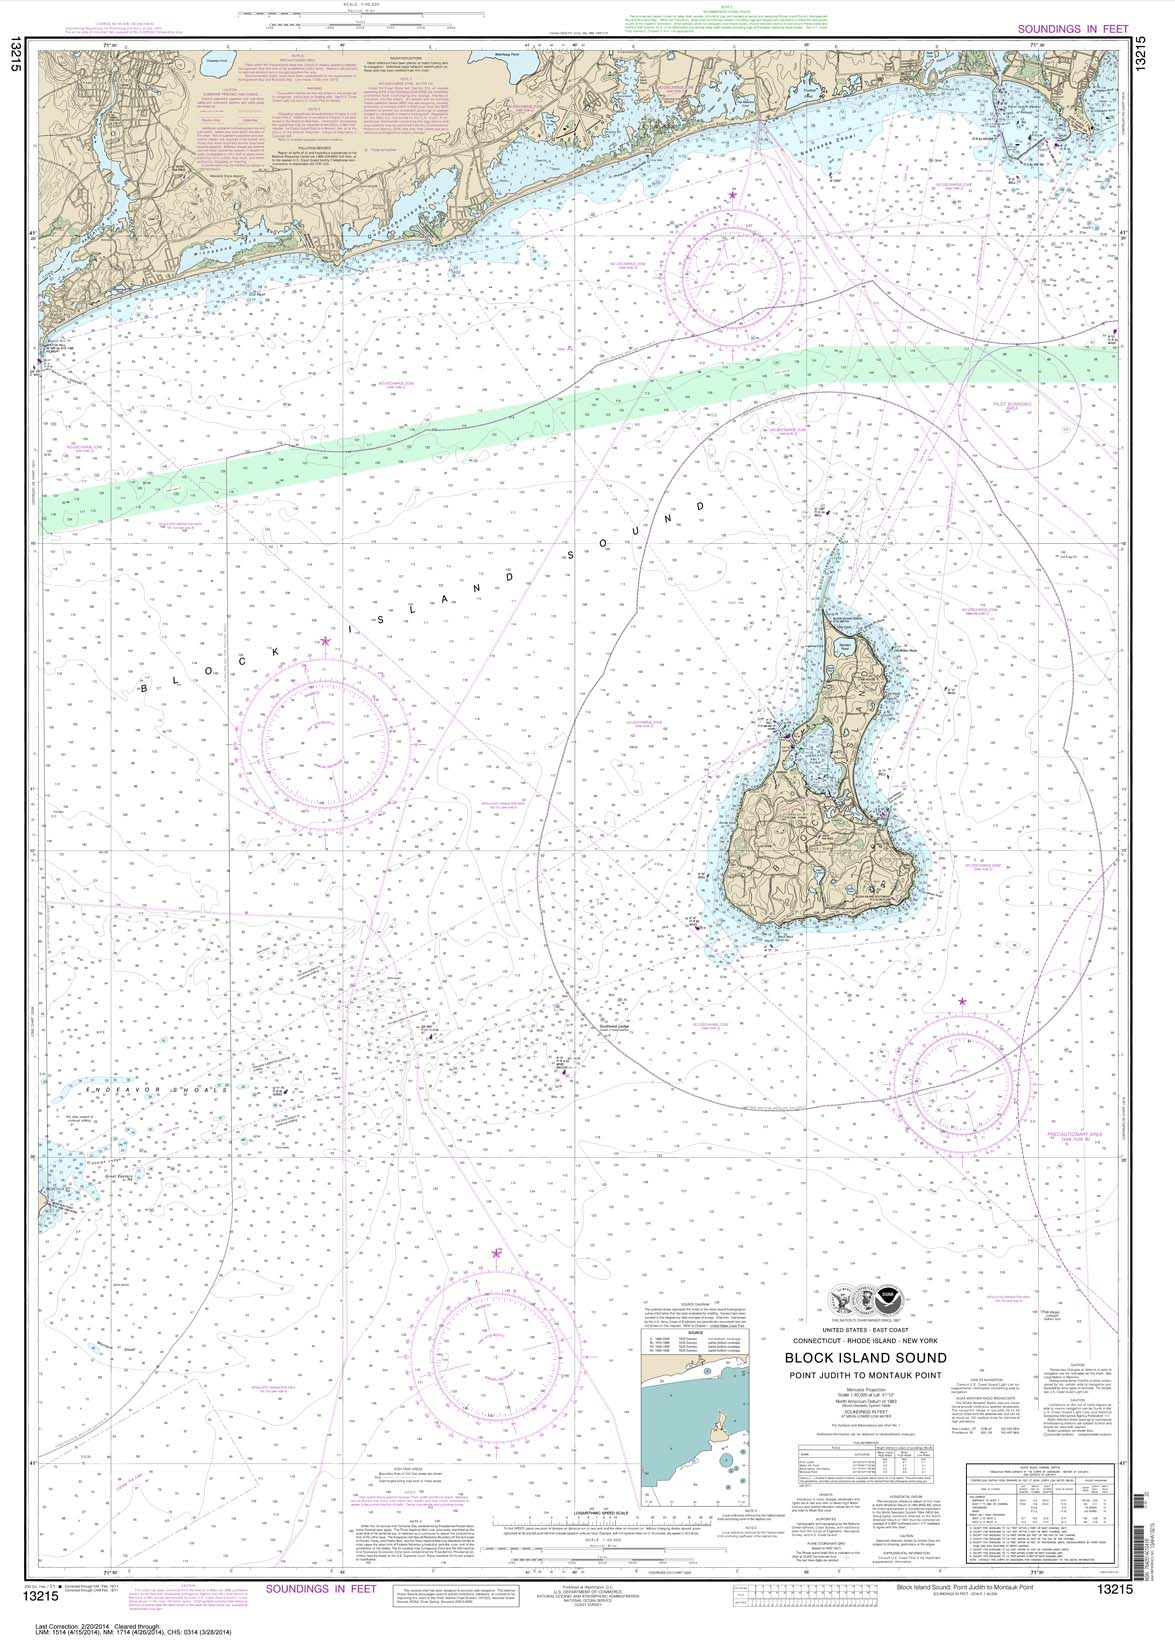 HISTORICAL NOAA Chart 13215: Block Island Sound Point Judith to Montauk Point